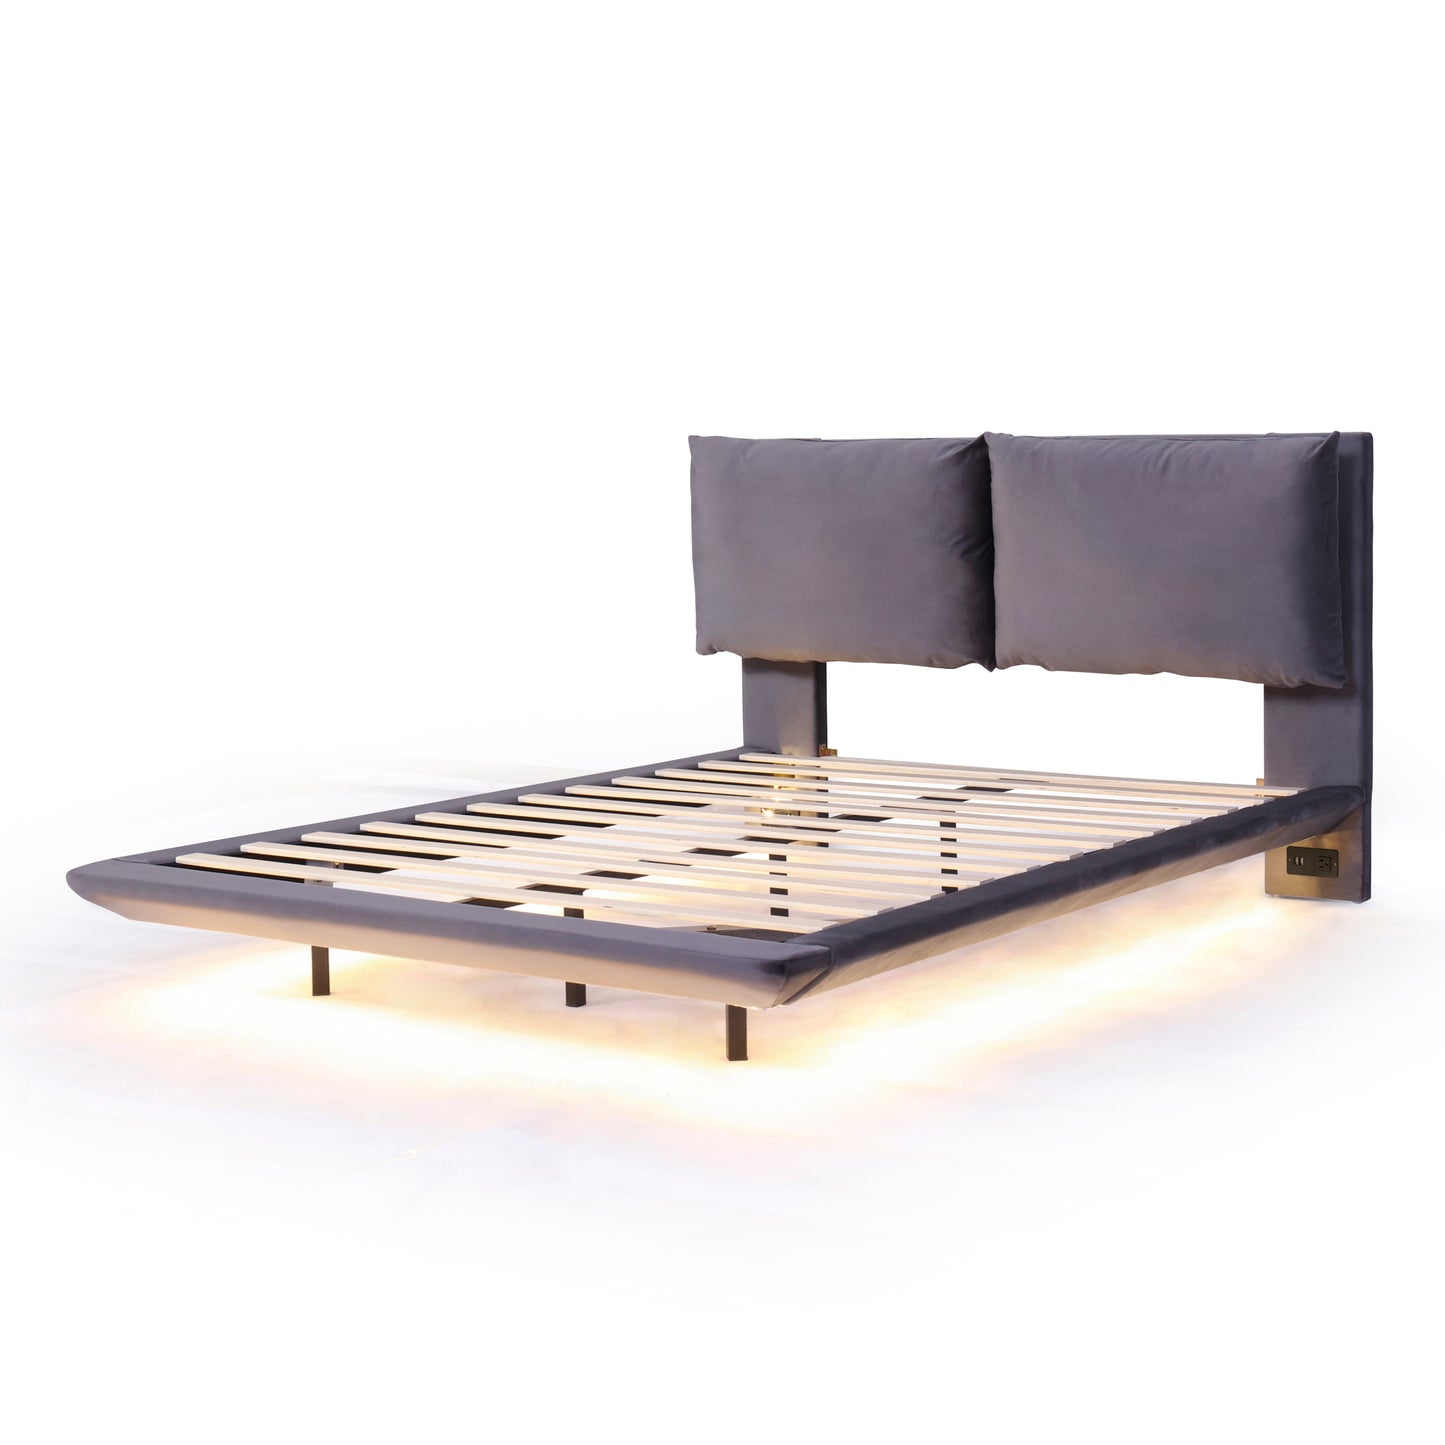 Queen Size Upholstered Platform Bed with Sensor Light and 2 Large Backrests, Stylish Platform Bed with 2 sets of USB Port and Socket on each rear Bed Leg, Gray